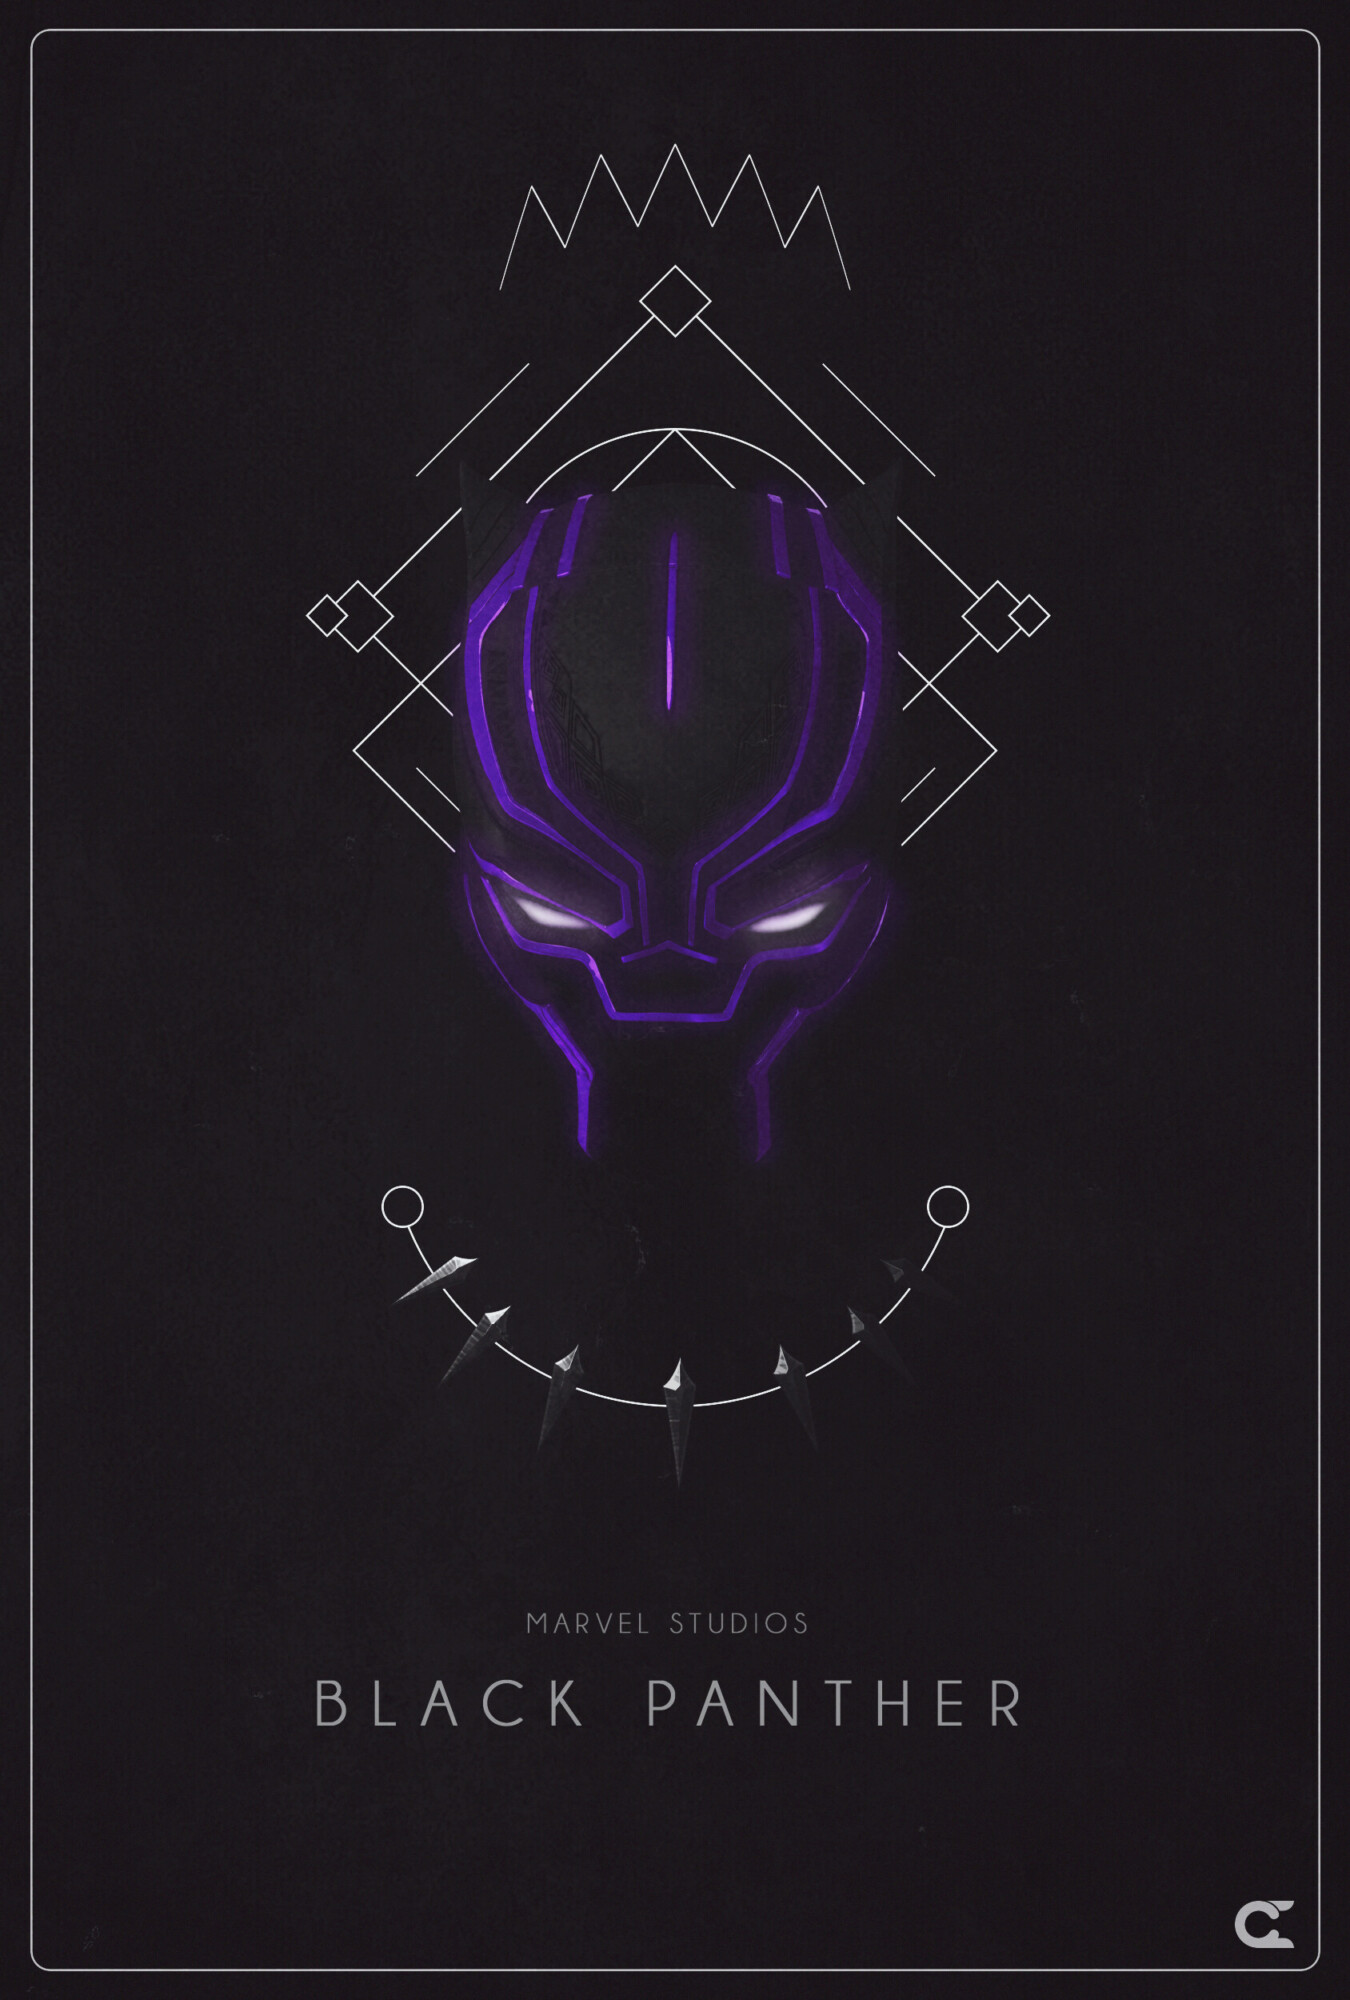 Black Panther (2018) – Alternative poster (Purple version)